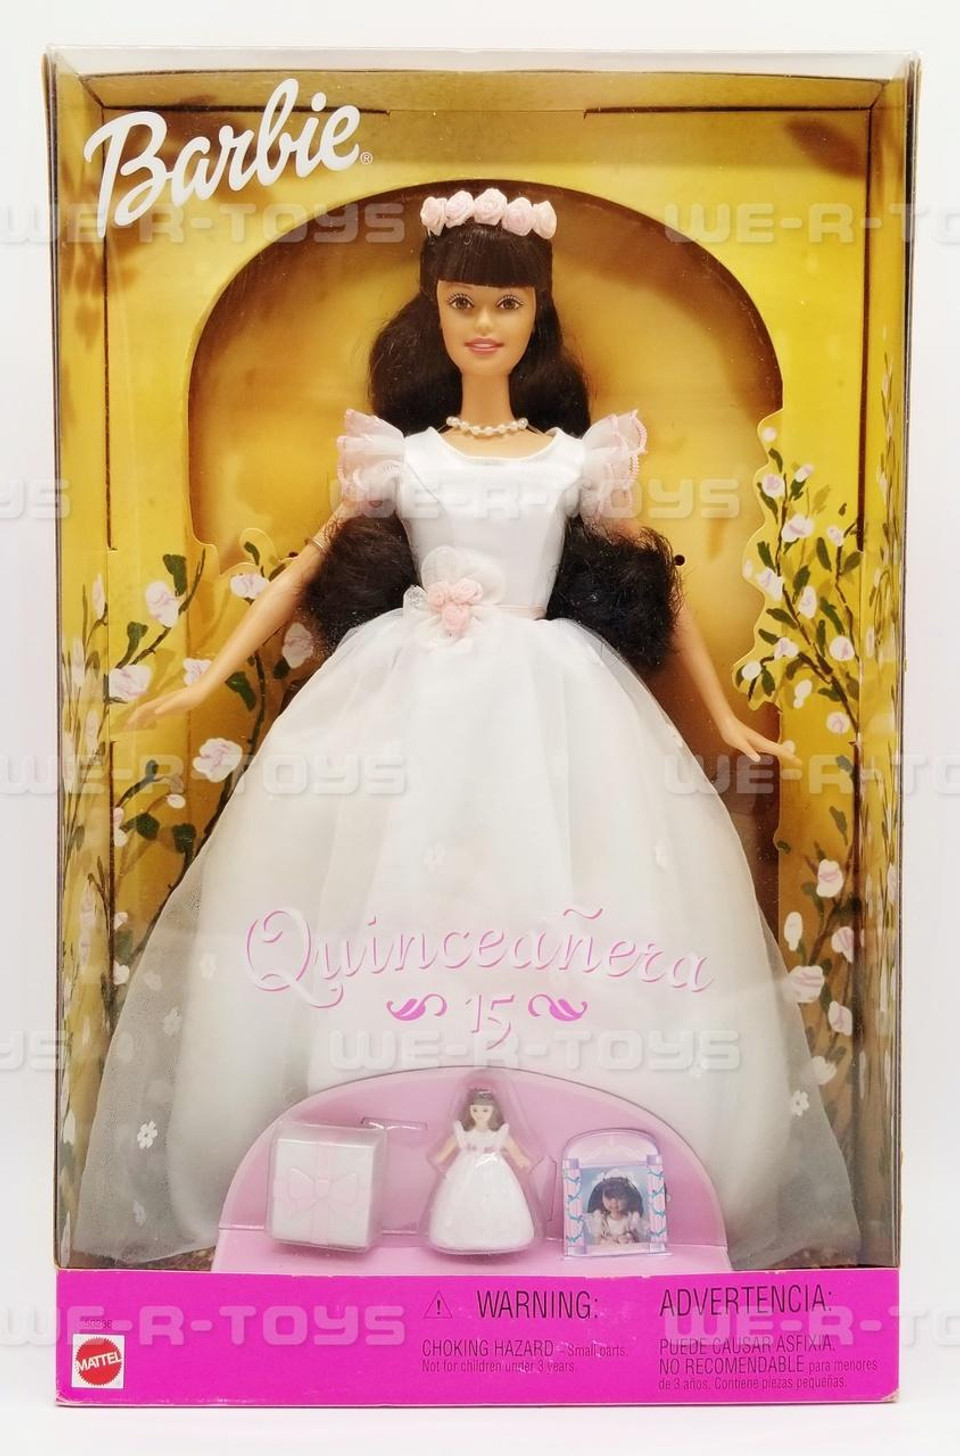 Barbie Quinceanera 15 Barbie Doll 2000 Mattel No. 50286 NEW - We-R-Toys